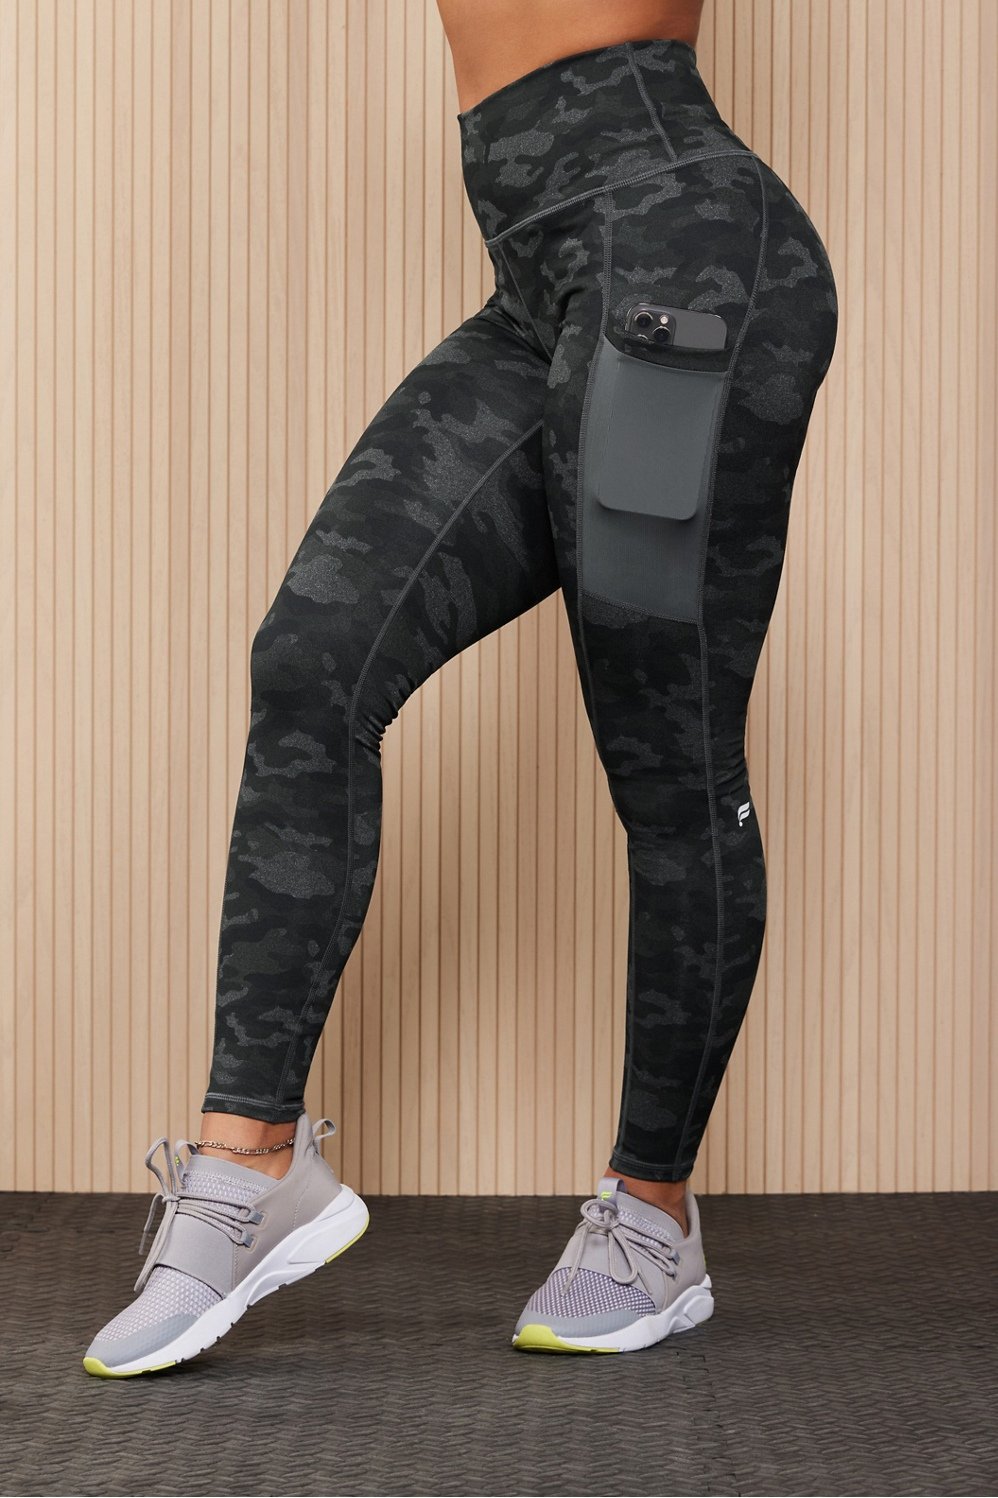 Fabletics Solid Black Active Pants Size XS - 54% off